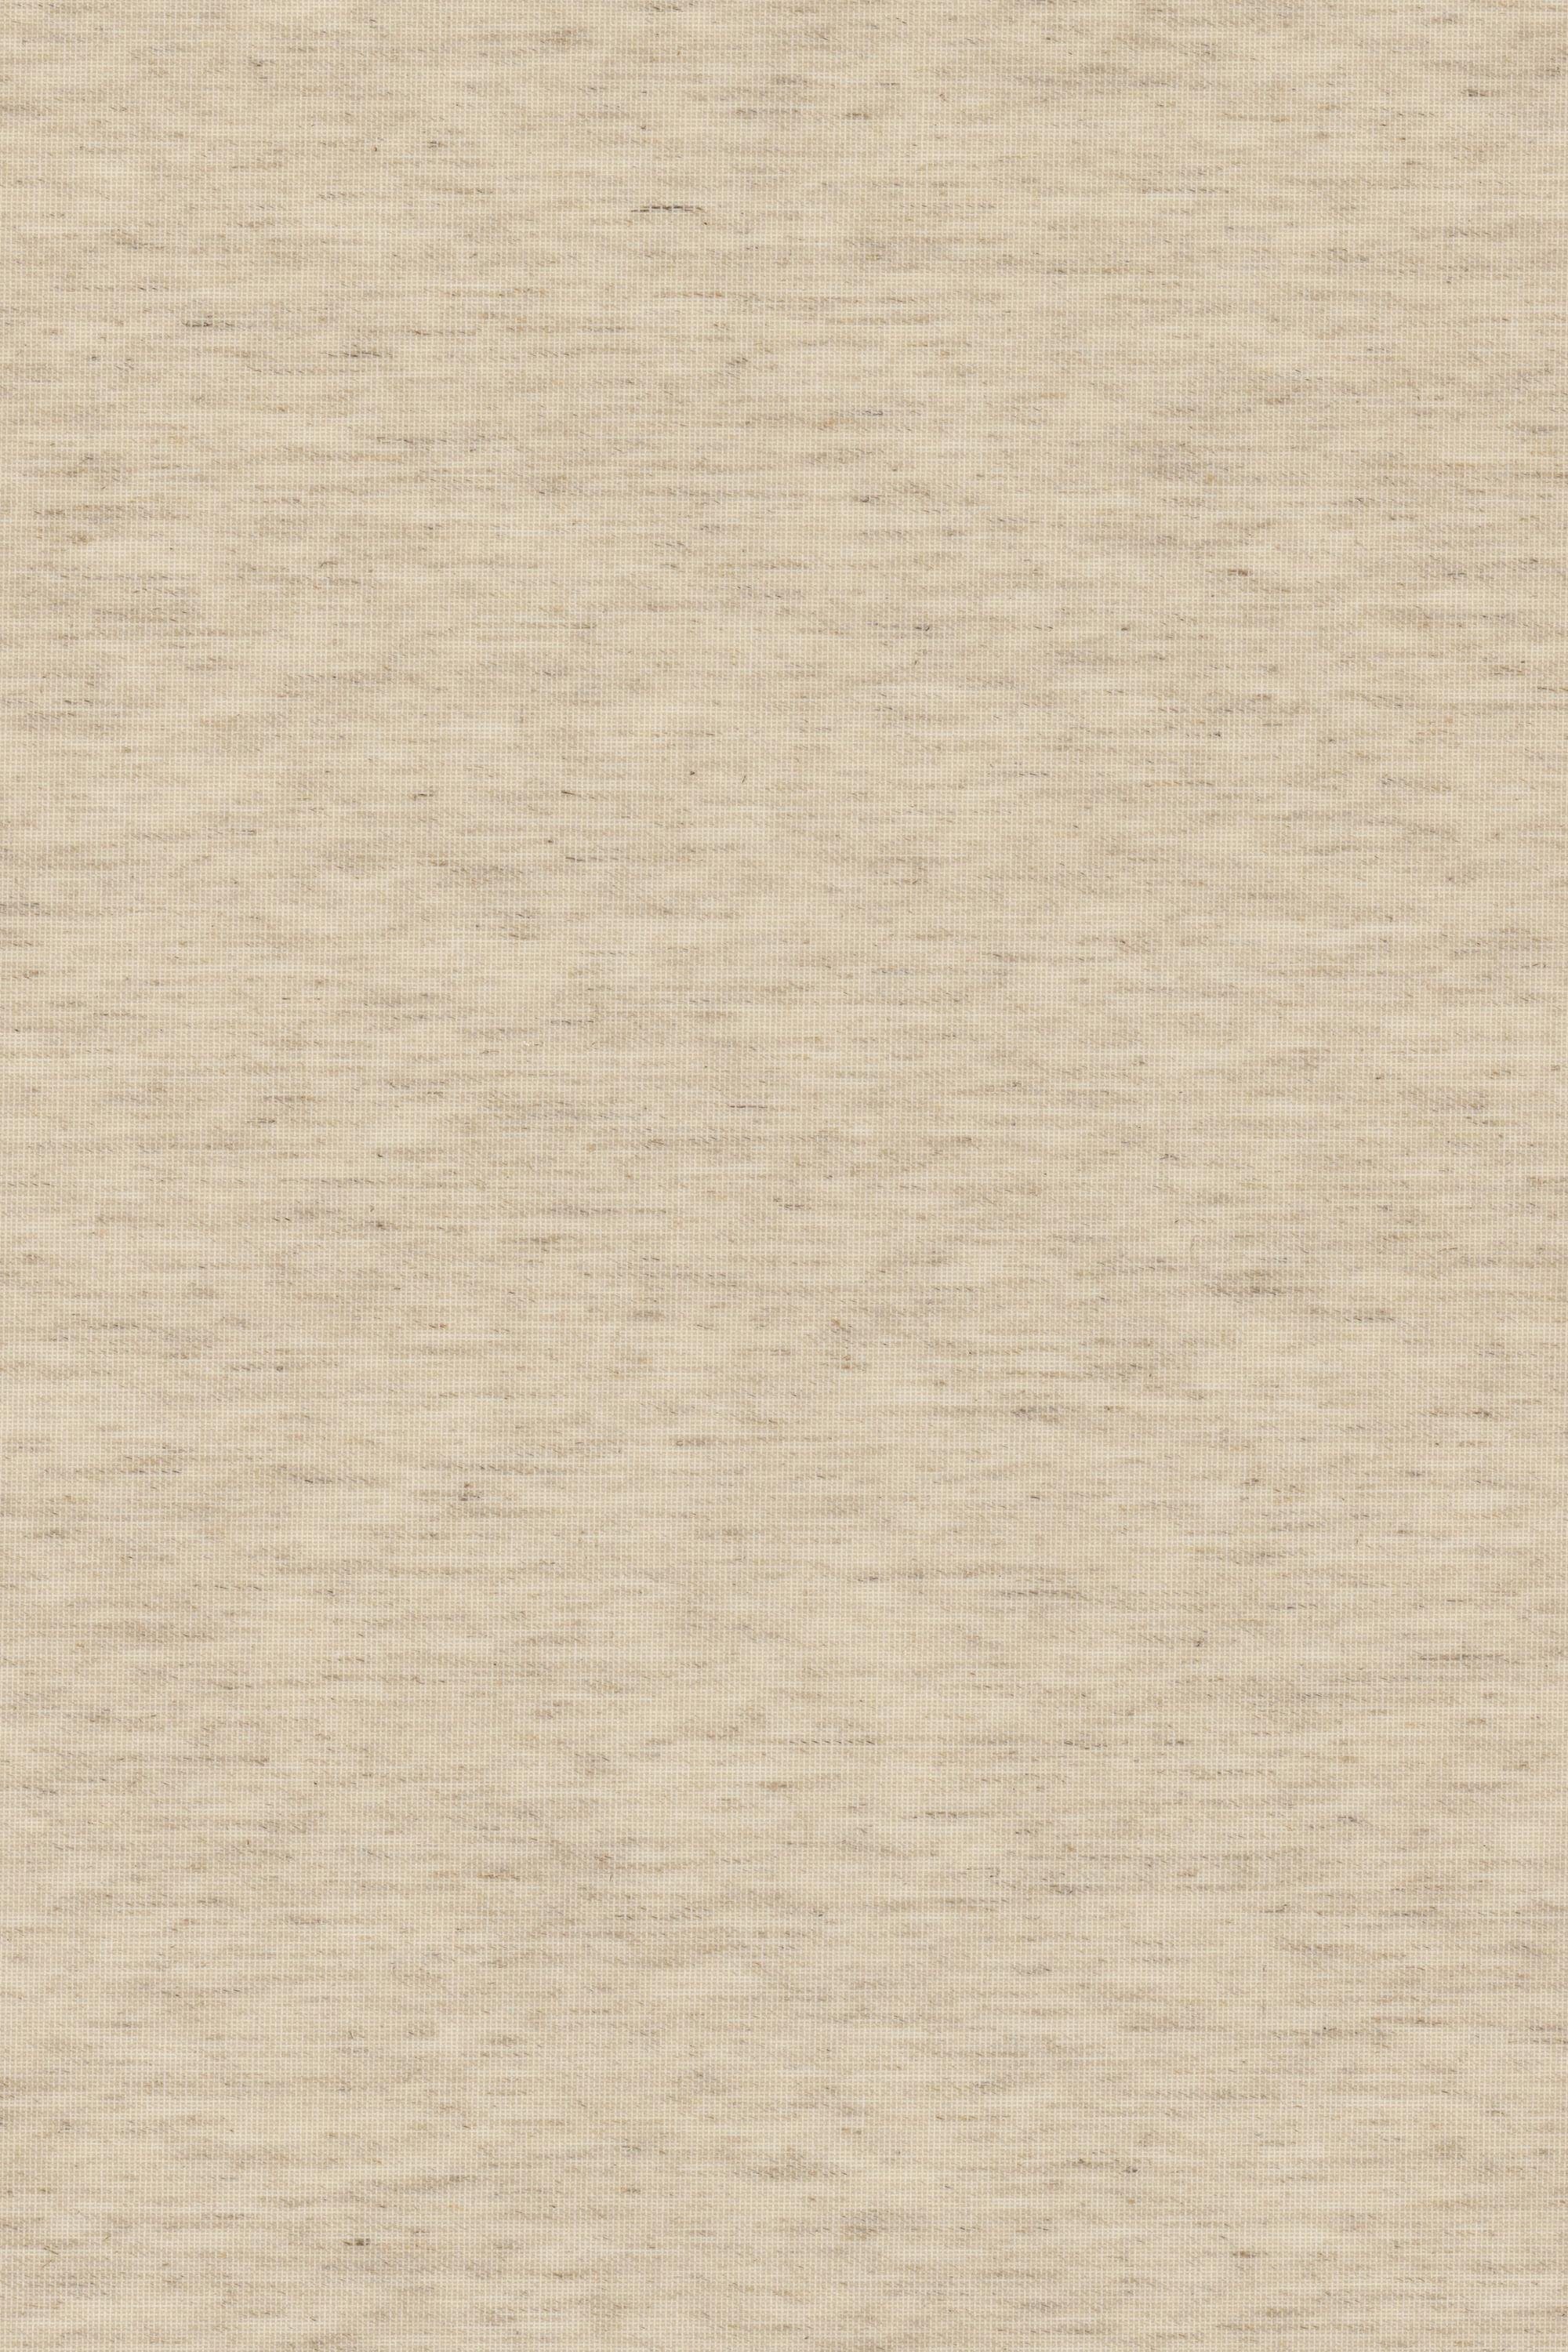 Rollo beige HxB Holzdekor blickdicht, Basisrollo 190x60cm Beige, LYSEL®, beige